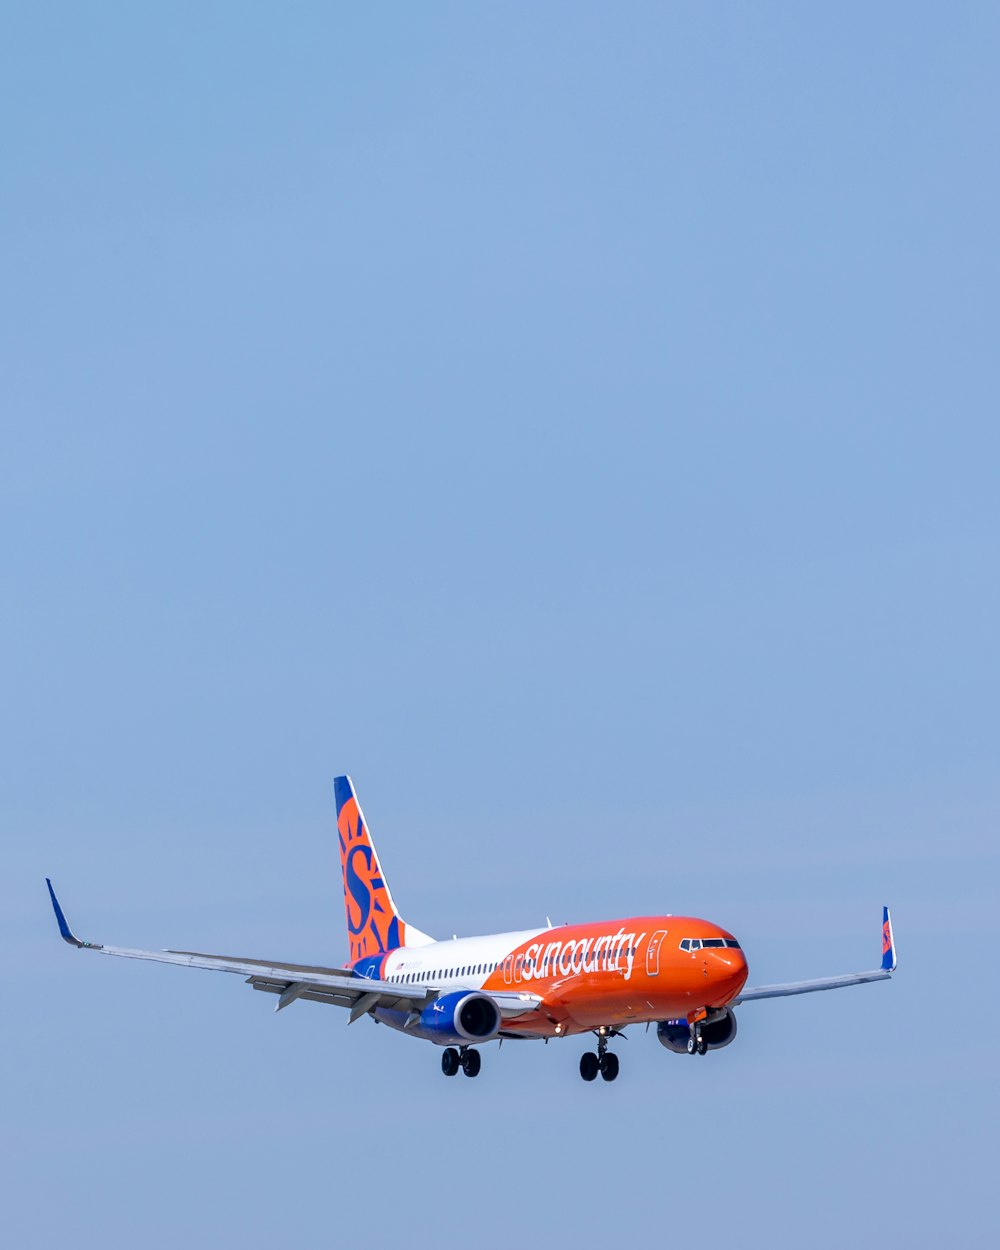 orange and white airplane on flight